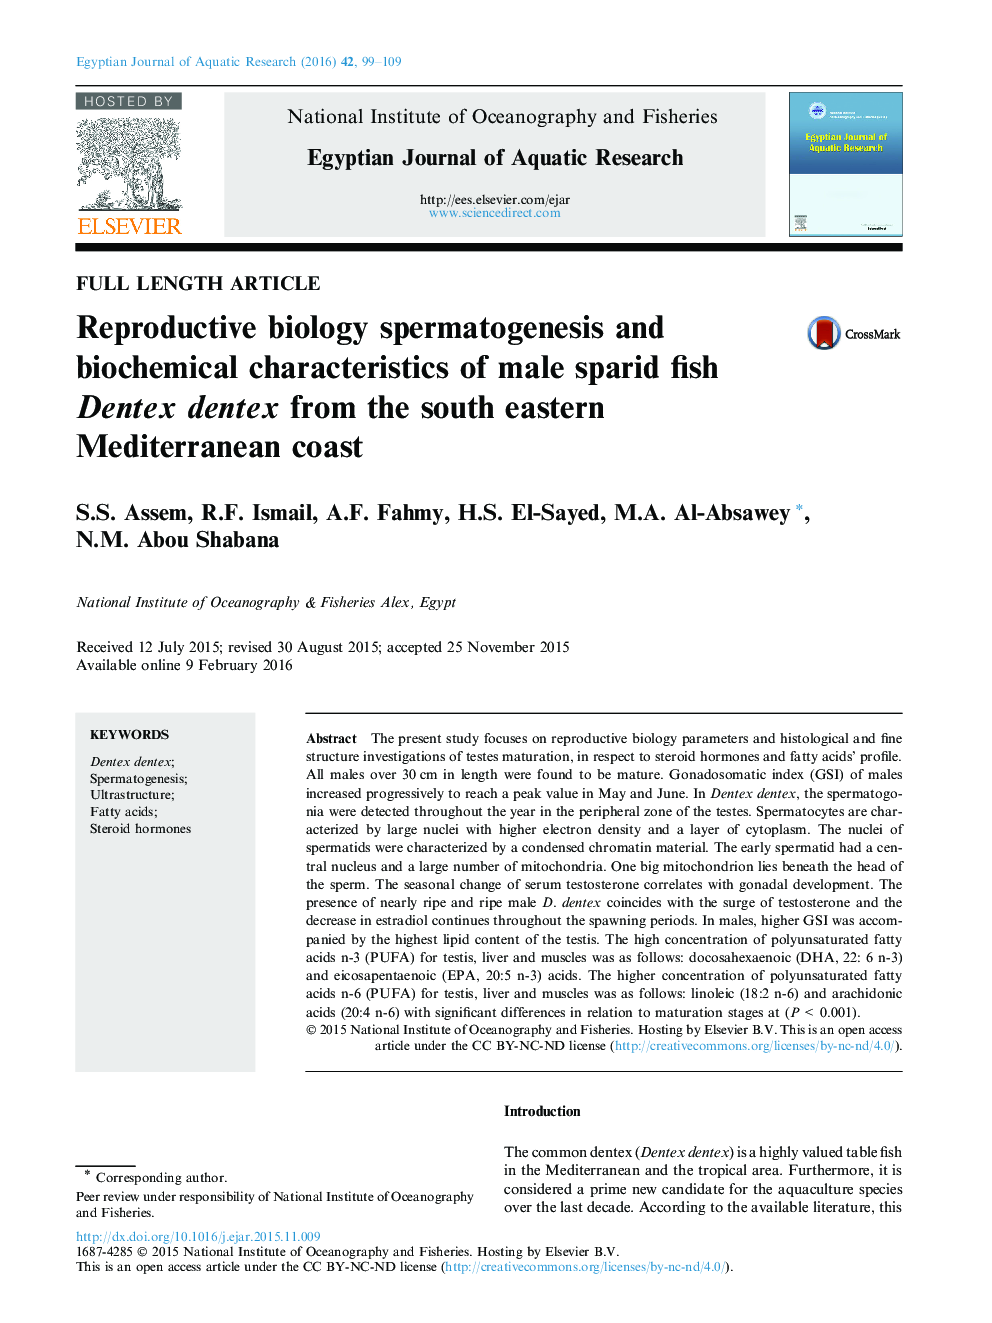 Reproductive biology spermatogenesis and biochemical characteristics of male sparid fish Dentex dentex from the south eastern Mediterranean coast 